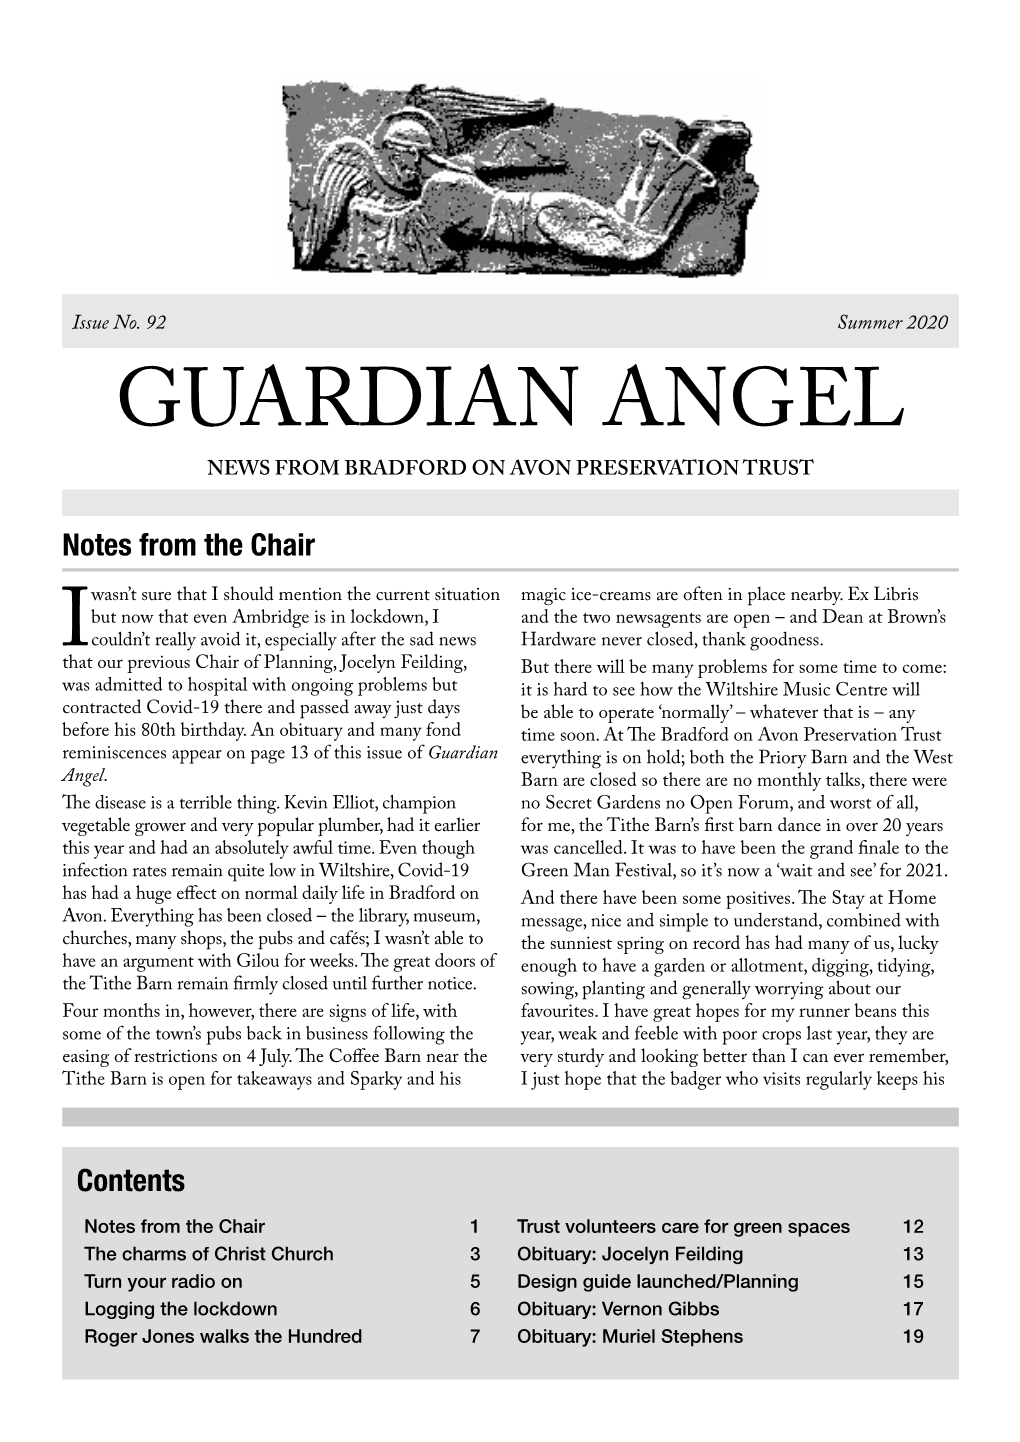 Guardian Angel News from Bradford on Avon Preservation Trust